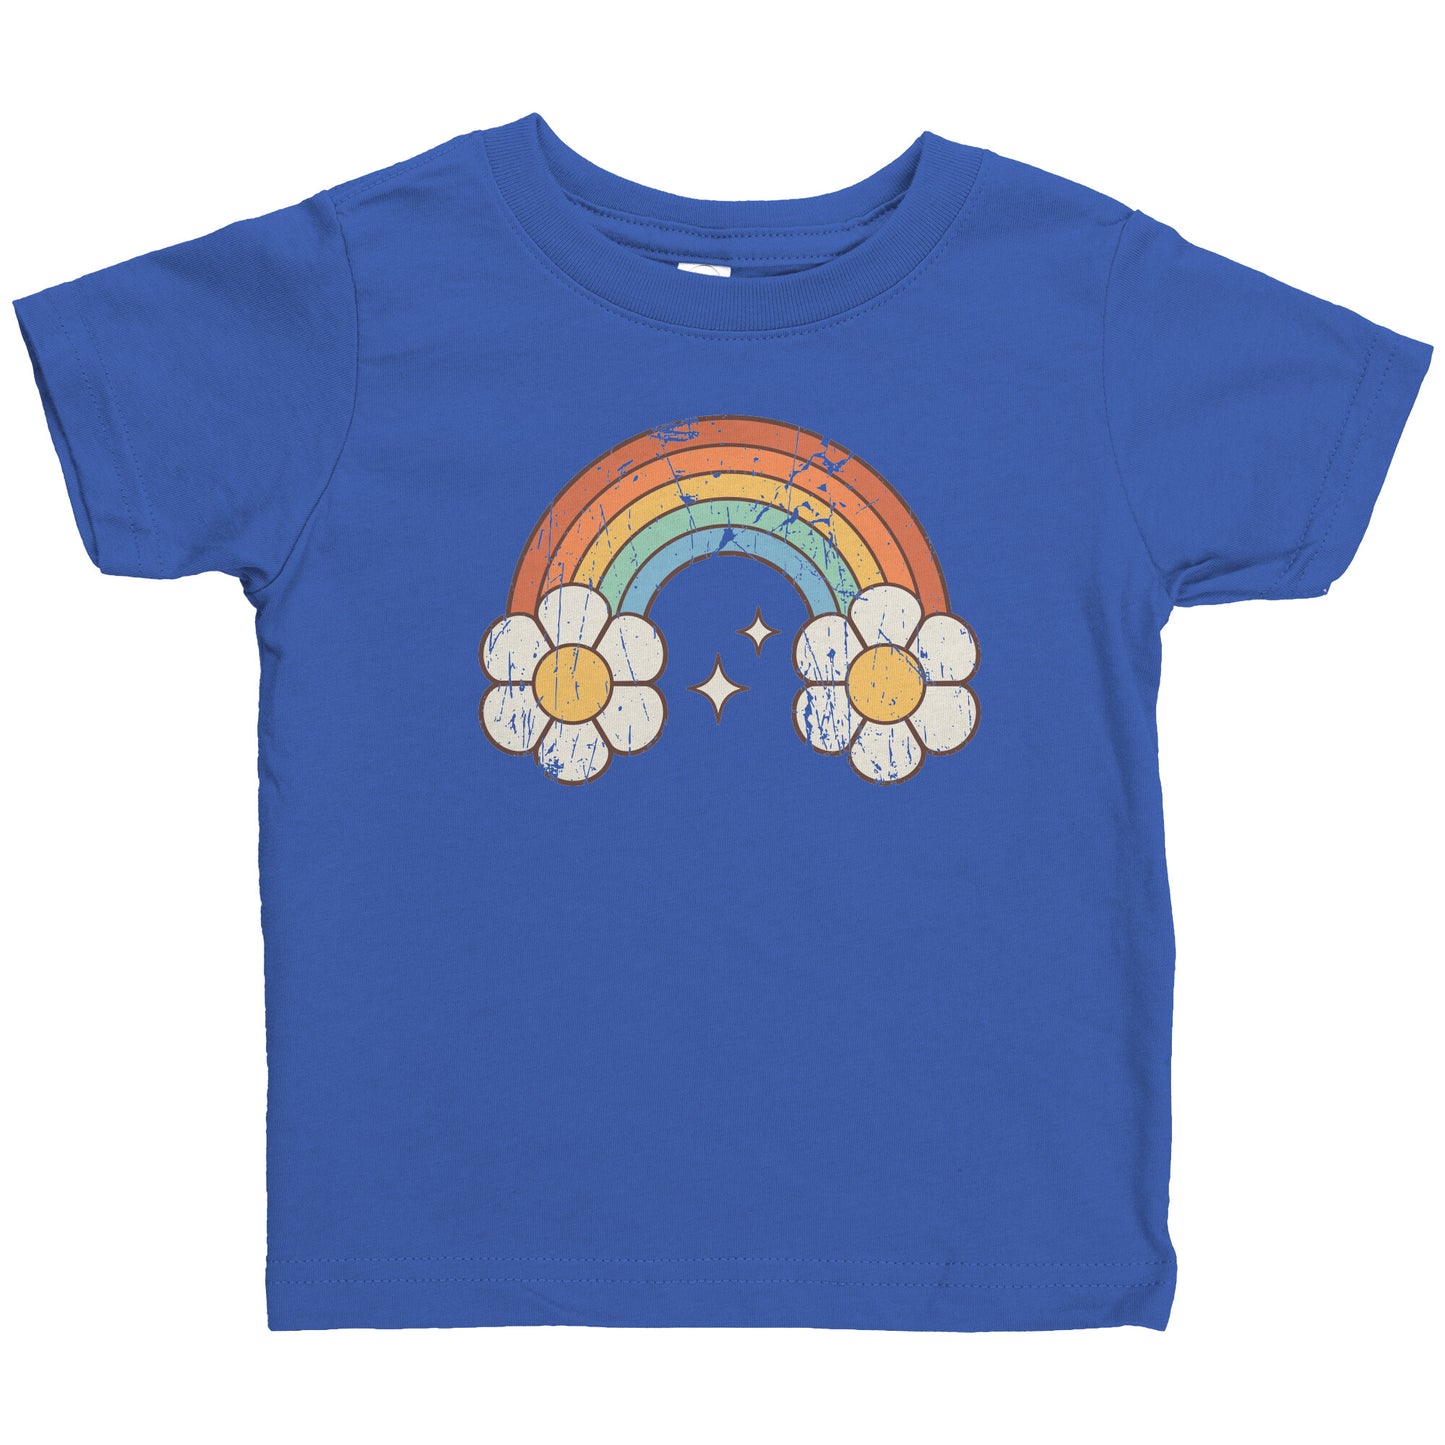 Vintage Rainbow Infant Shirt